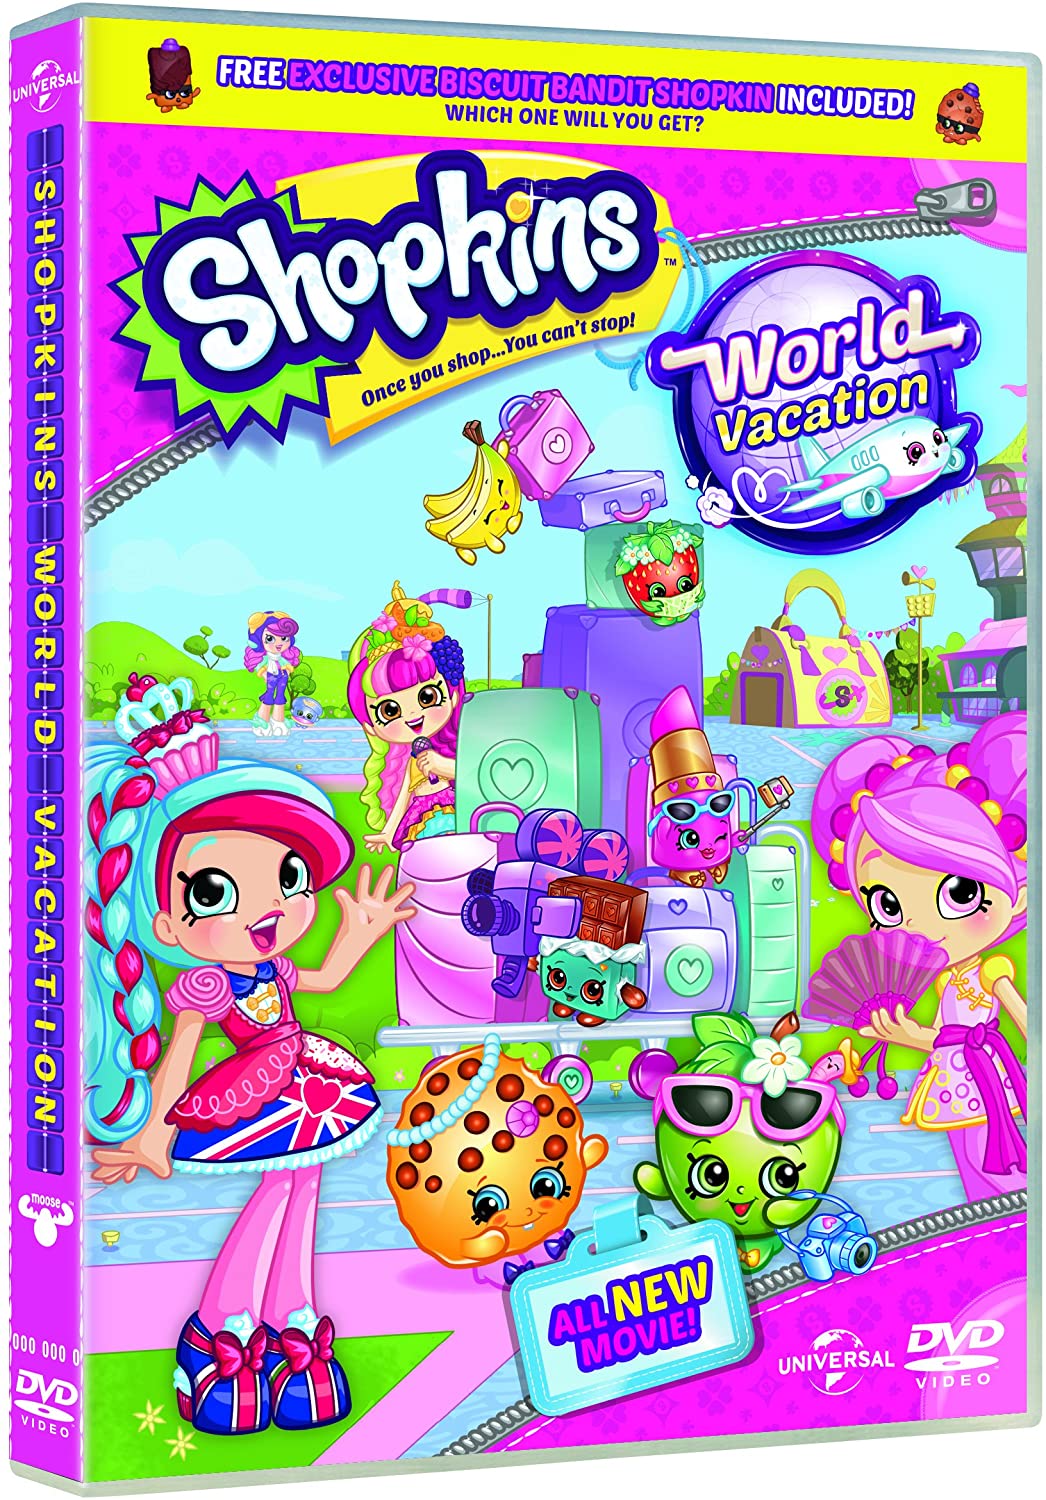 Shopkins: World Vacation [Includes Shopkin Figurine] (DVD)